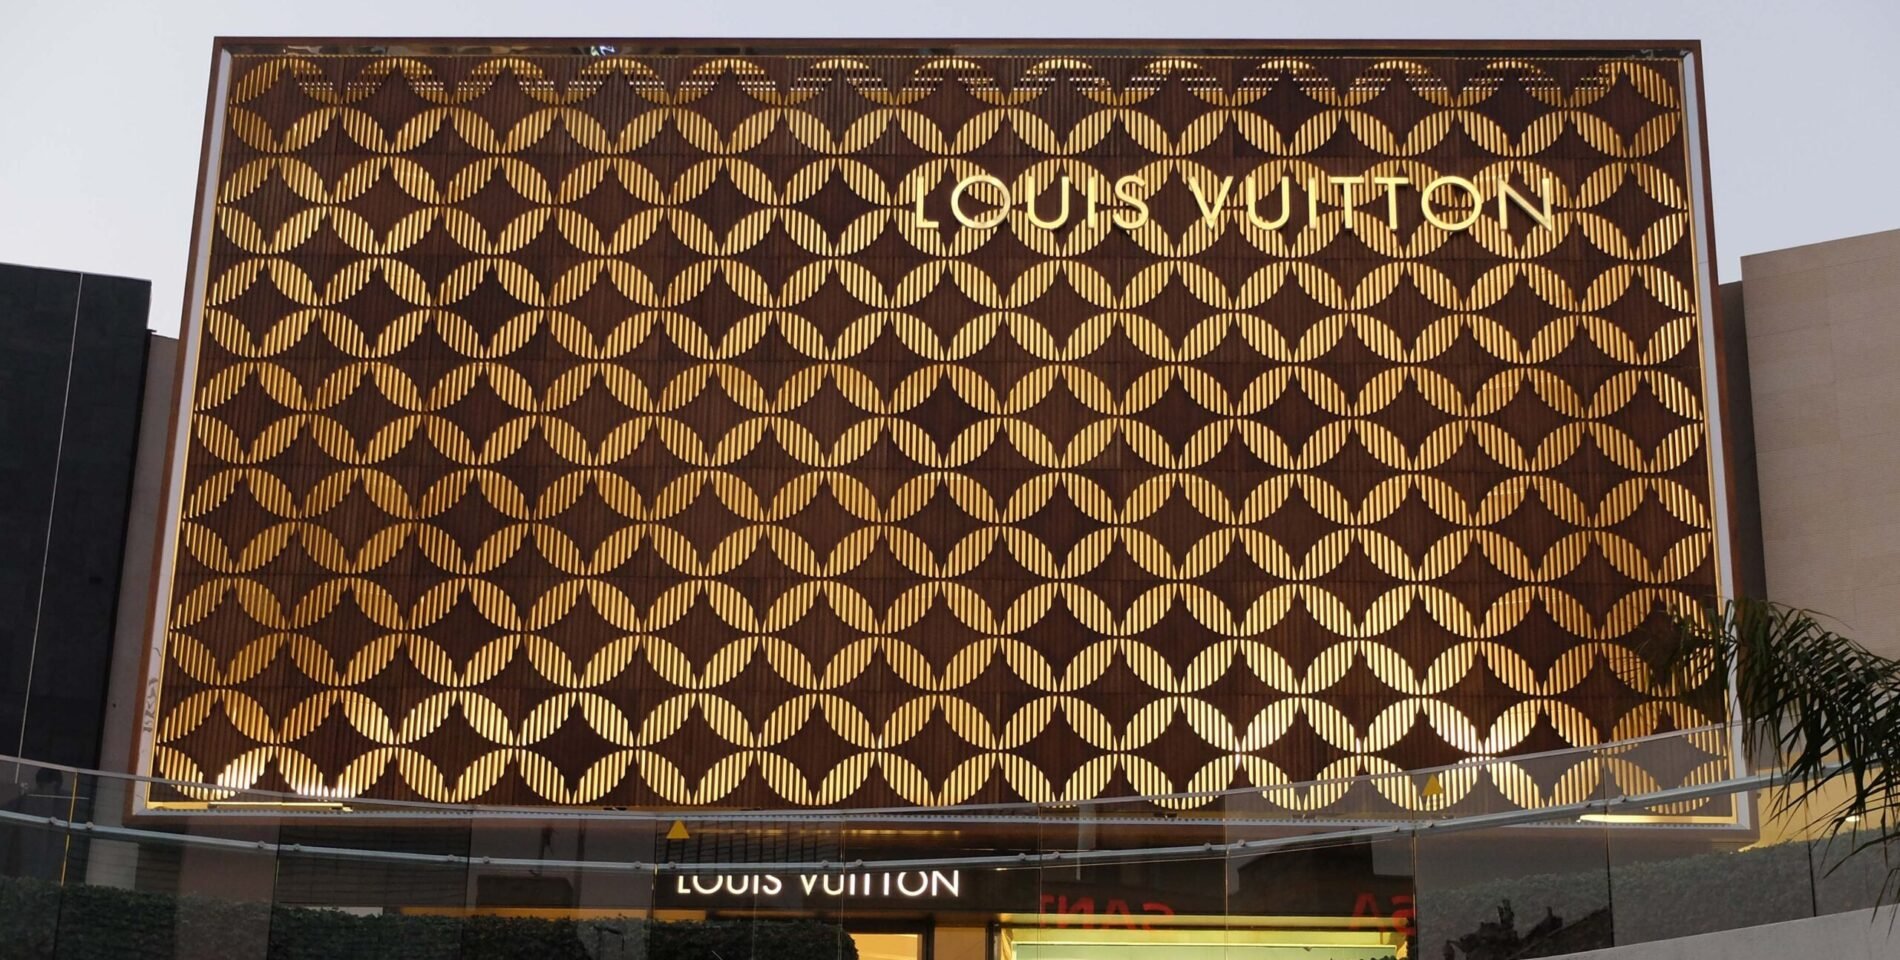 Louis Vuitton store facade editorial photography Image of fashion   166504812